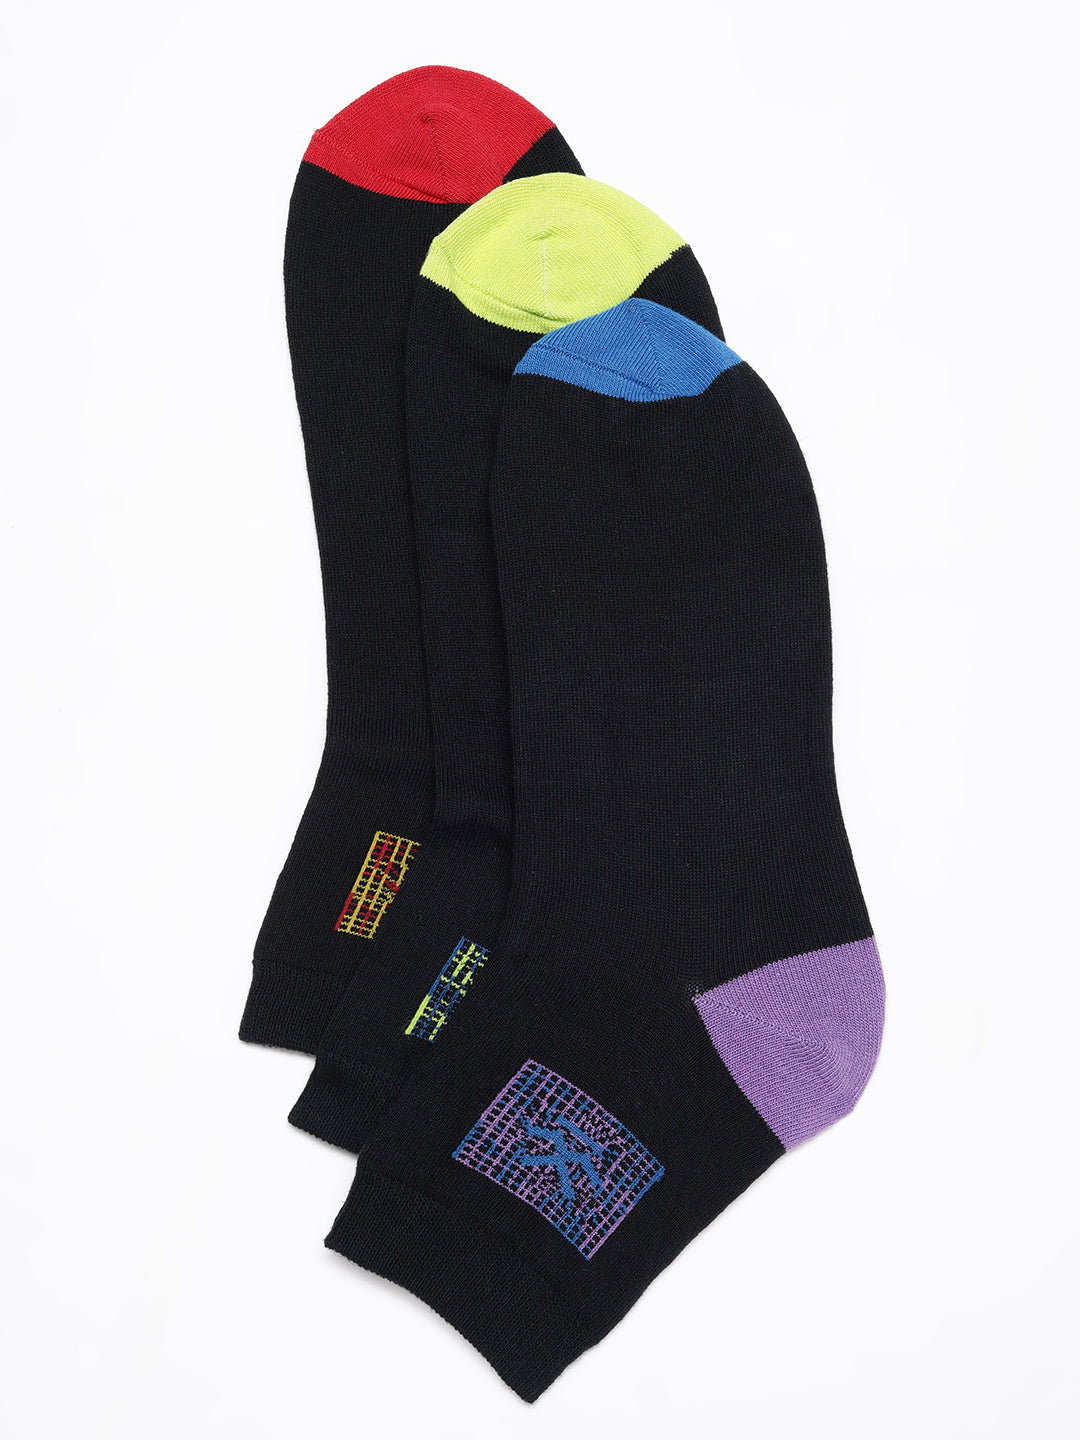 Pack of 3 Printed Design Socks